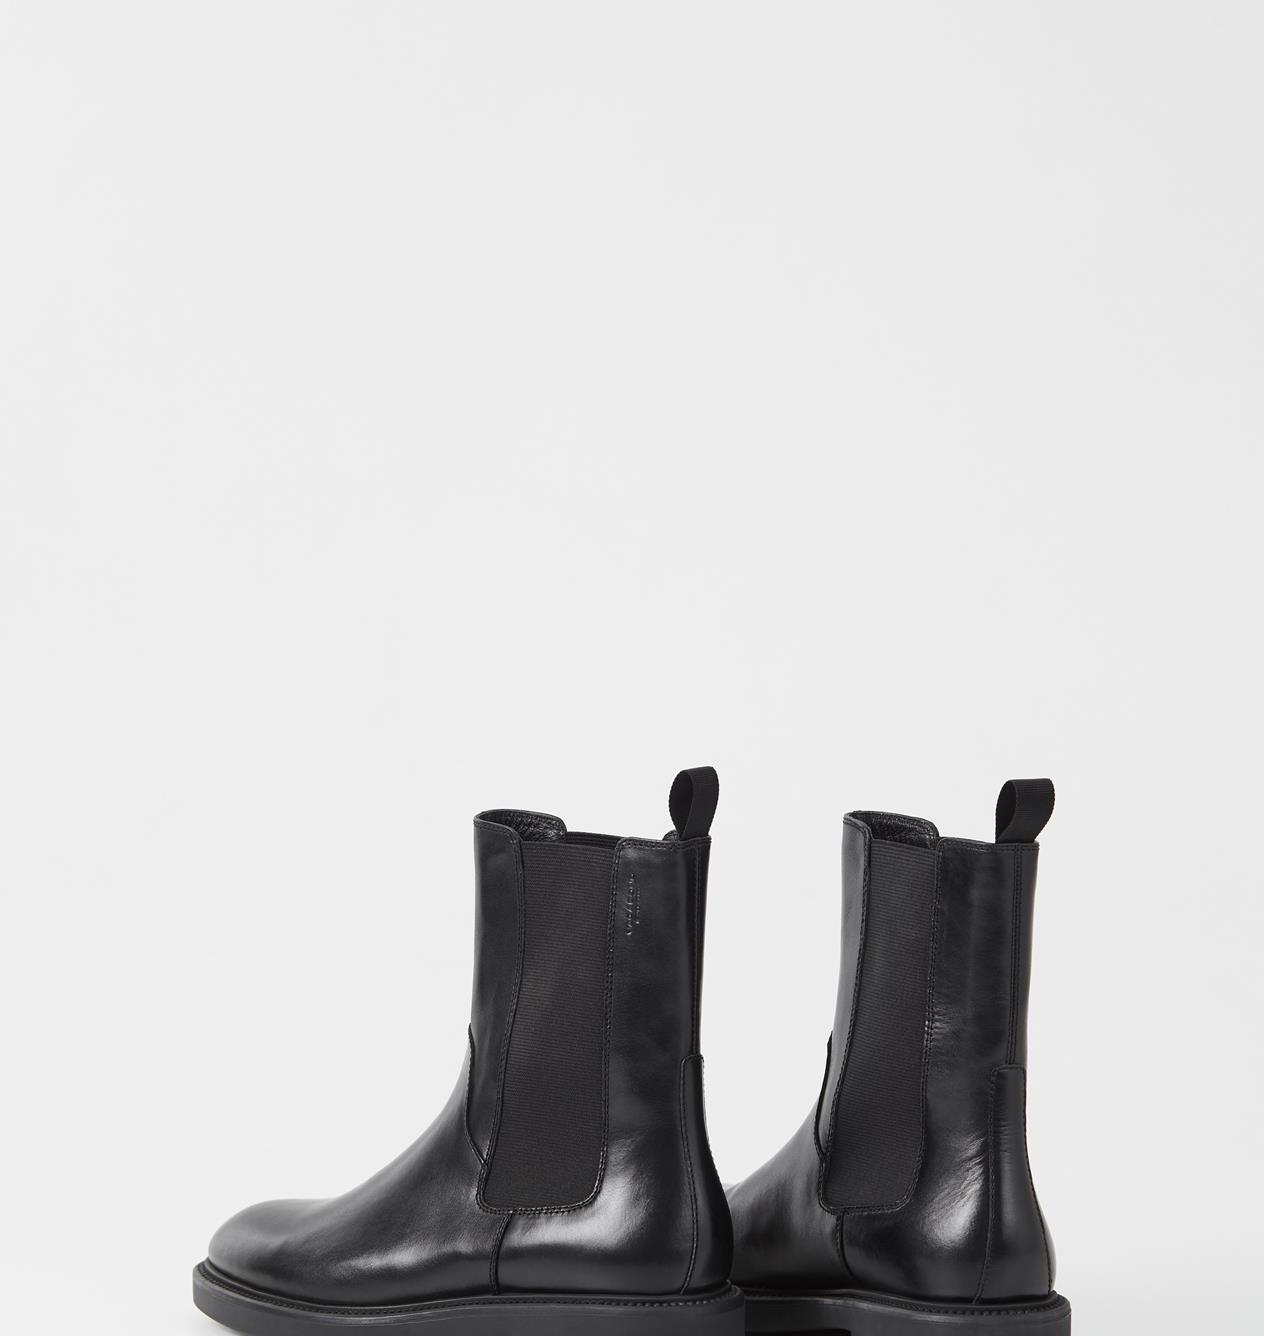 Alex - Black Boots Woman | Vagabond